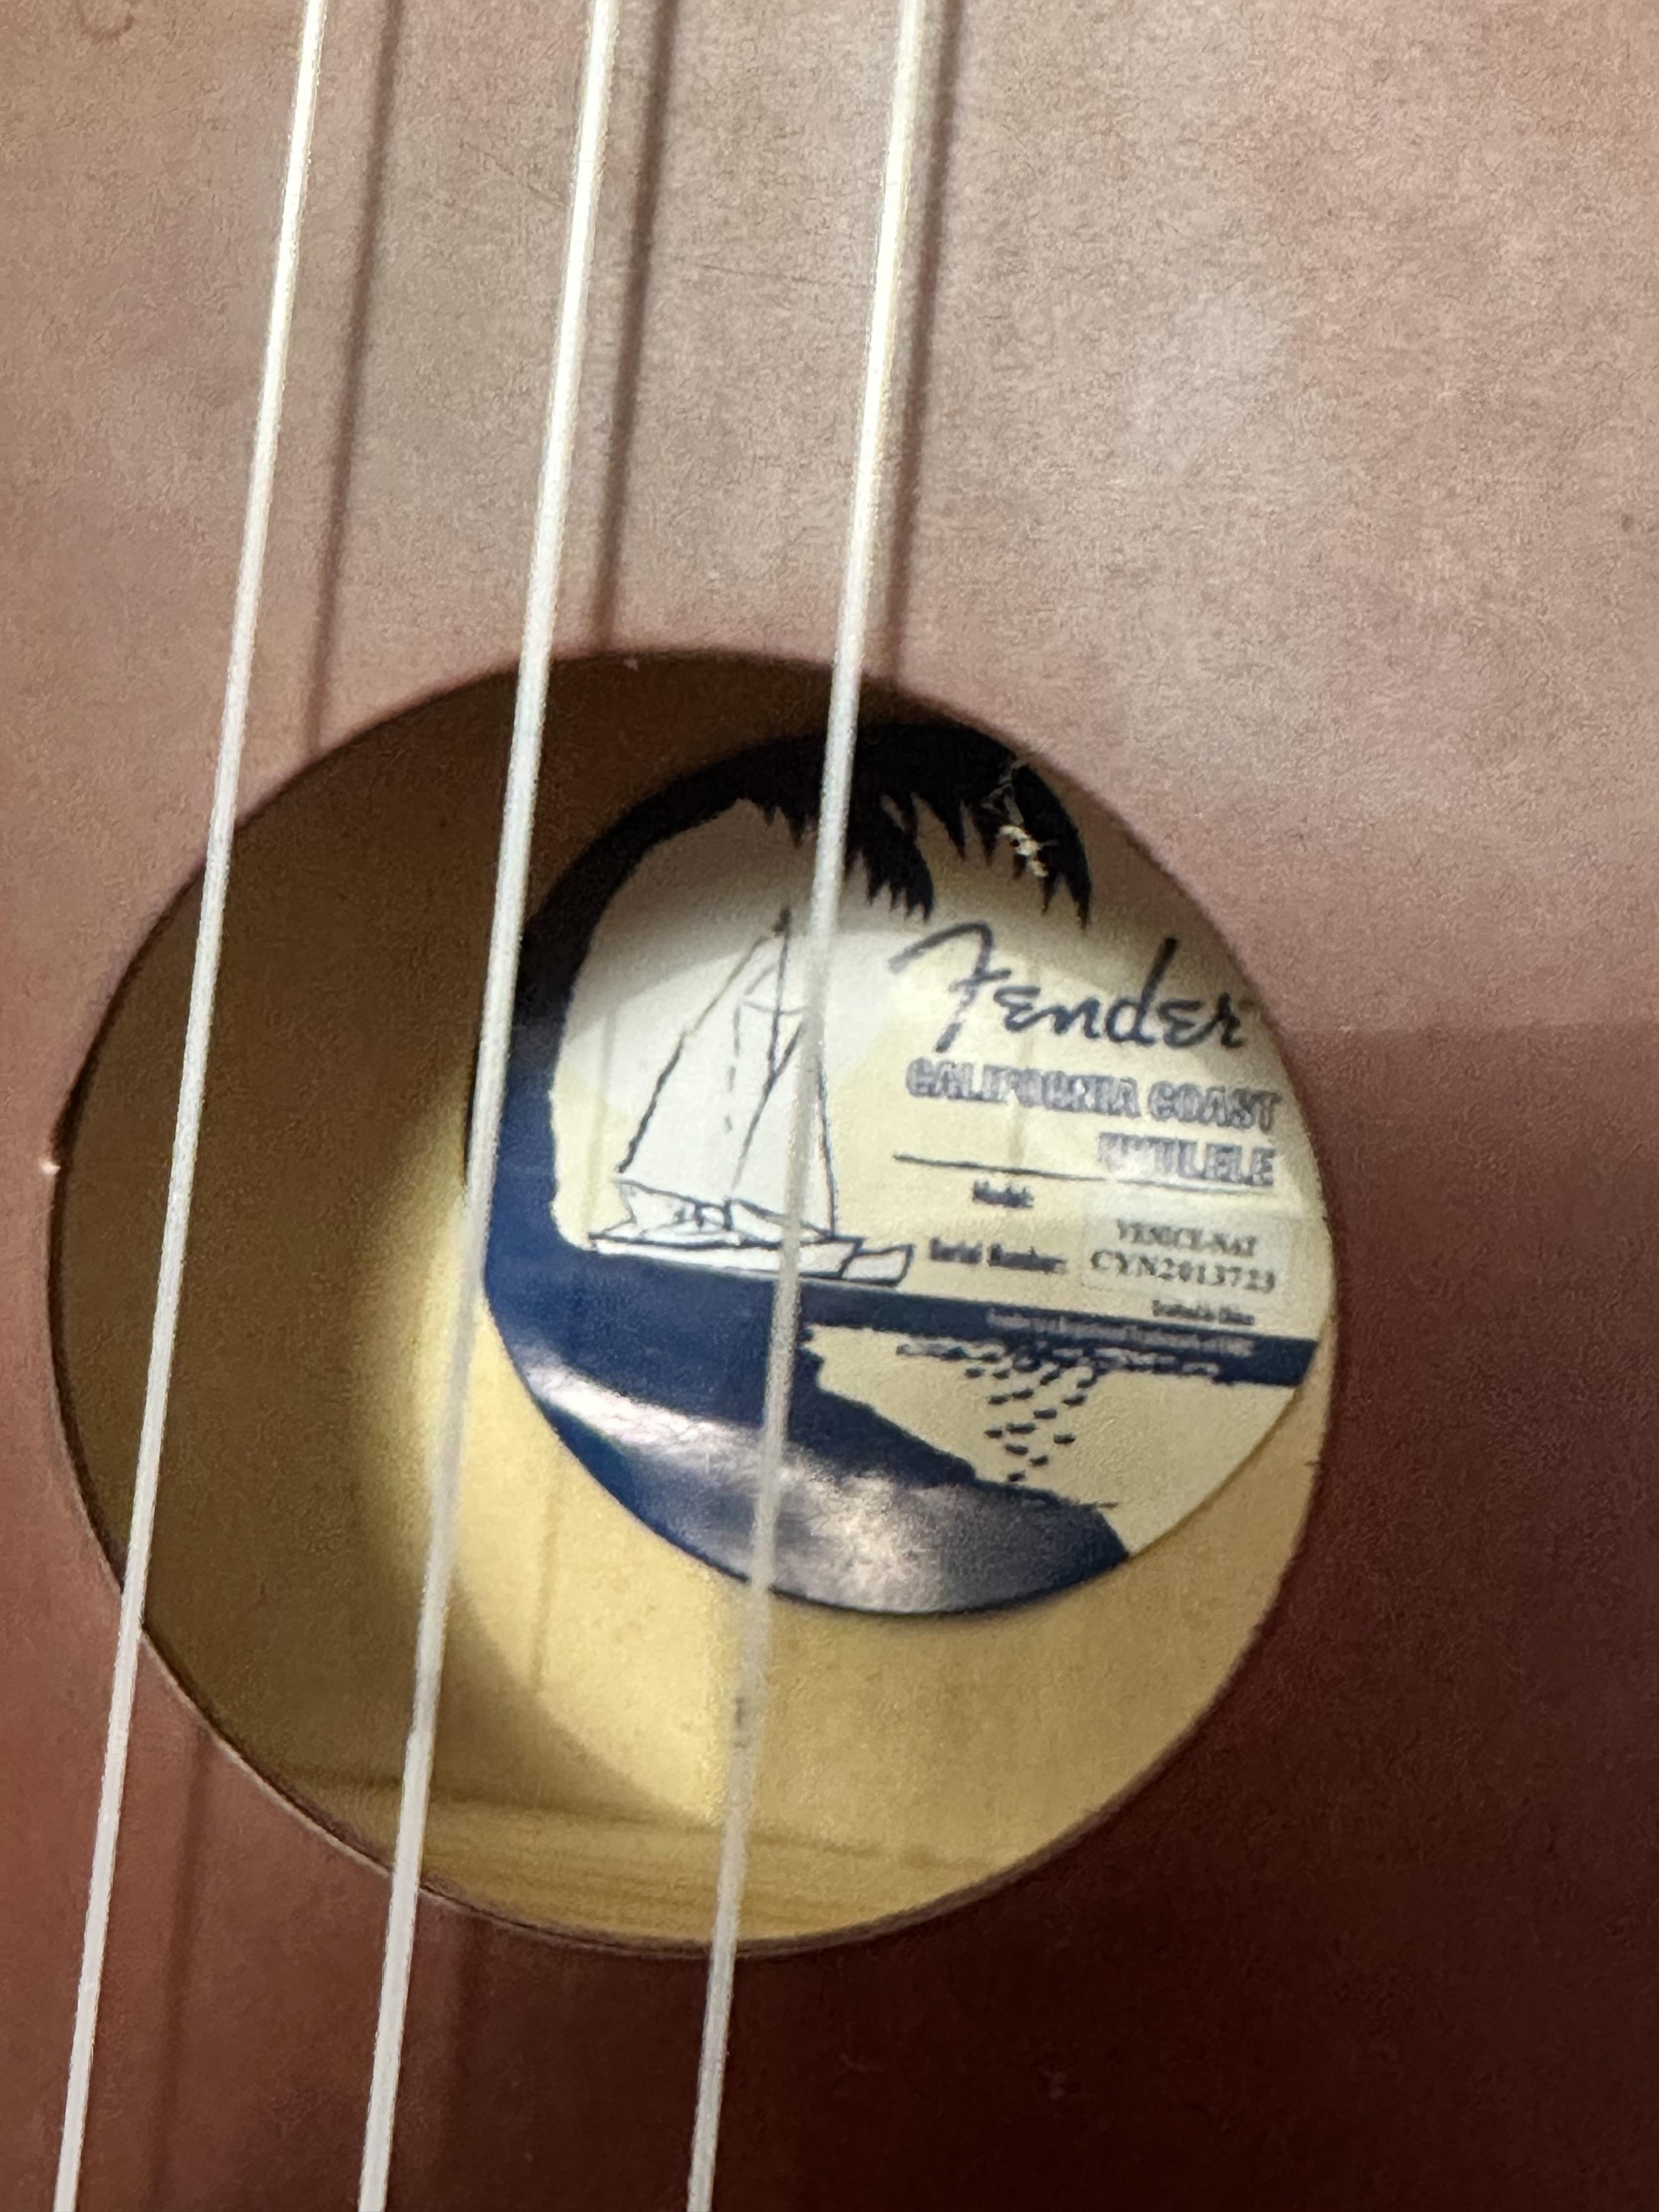 A Fender California Coast Ukulele model no. Venice - Gnat, serial no. CYN2013723, with interior - Image 2 of 2